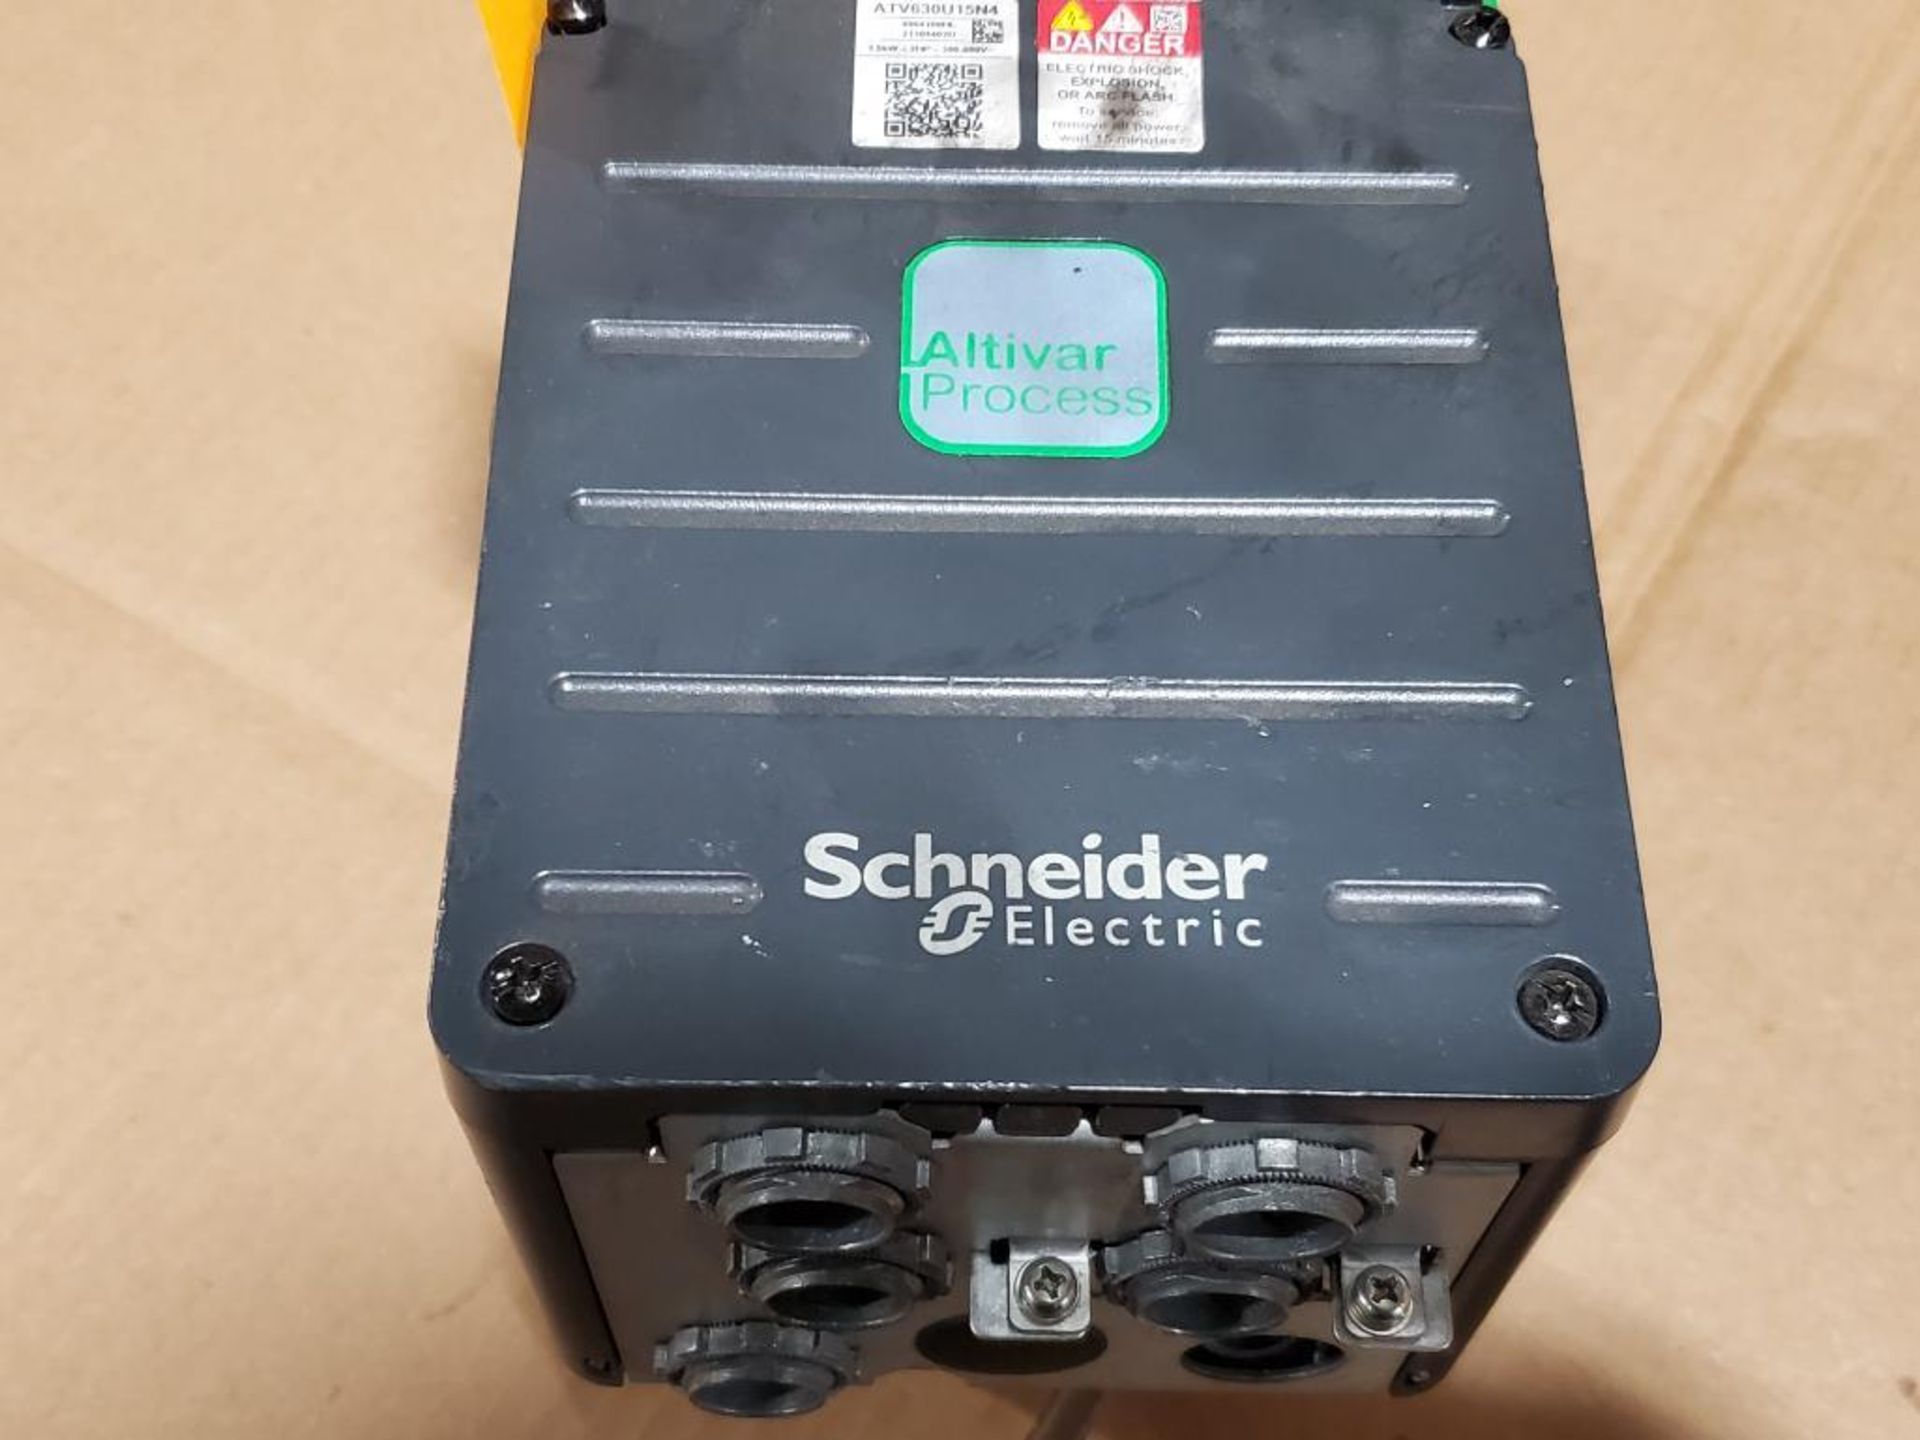 2HP Schneider Electric Altivar Process drive. ATV630U15N4. - Image 3 of 9